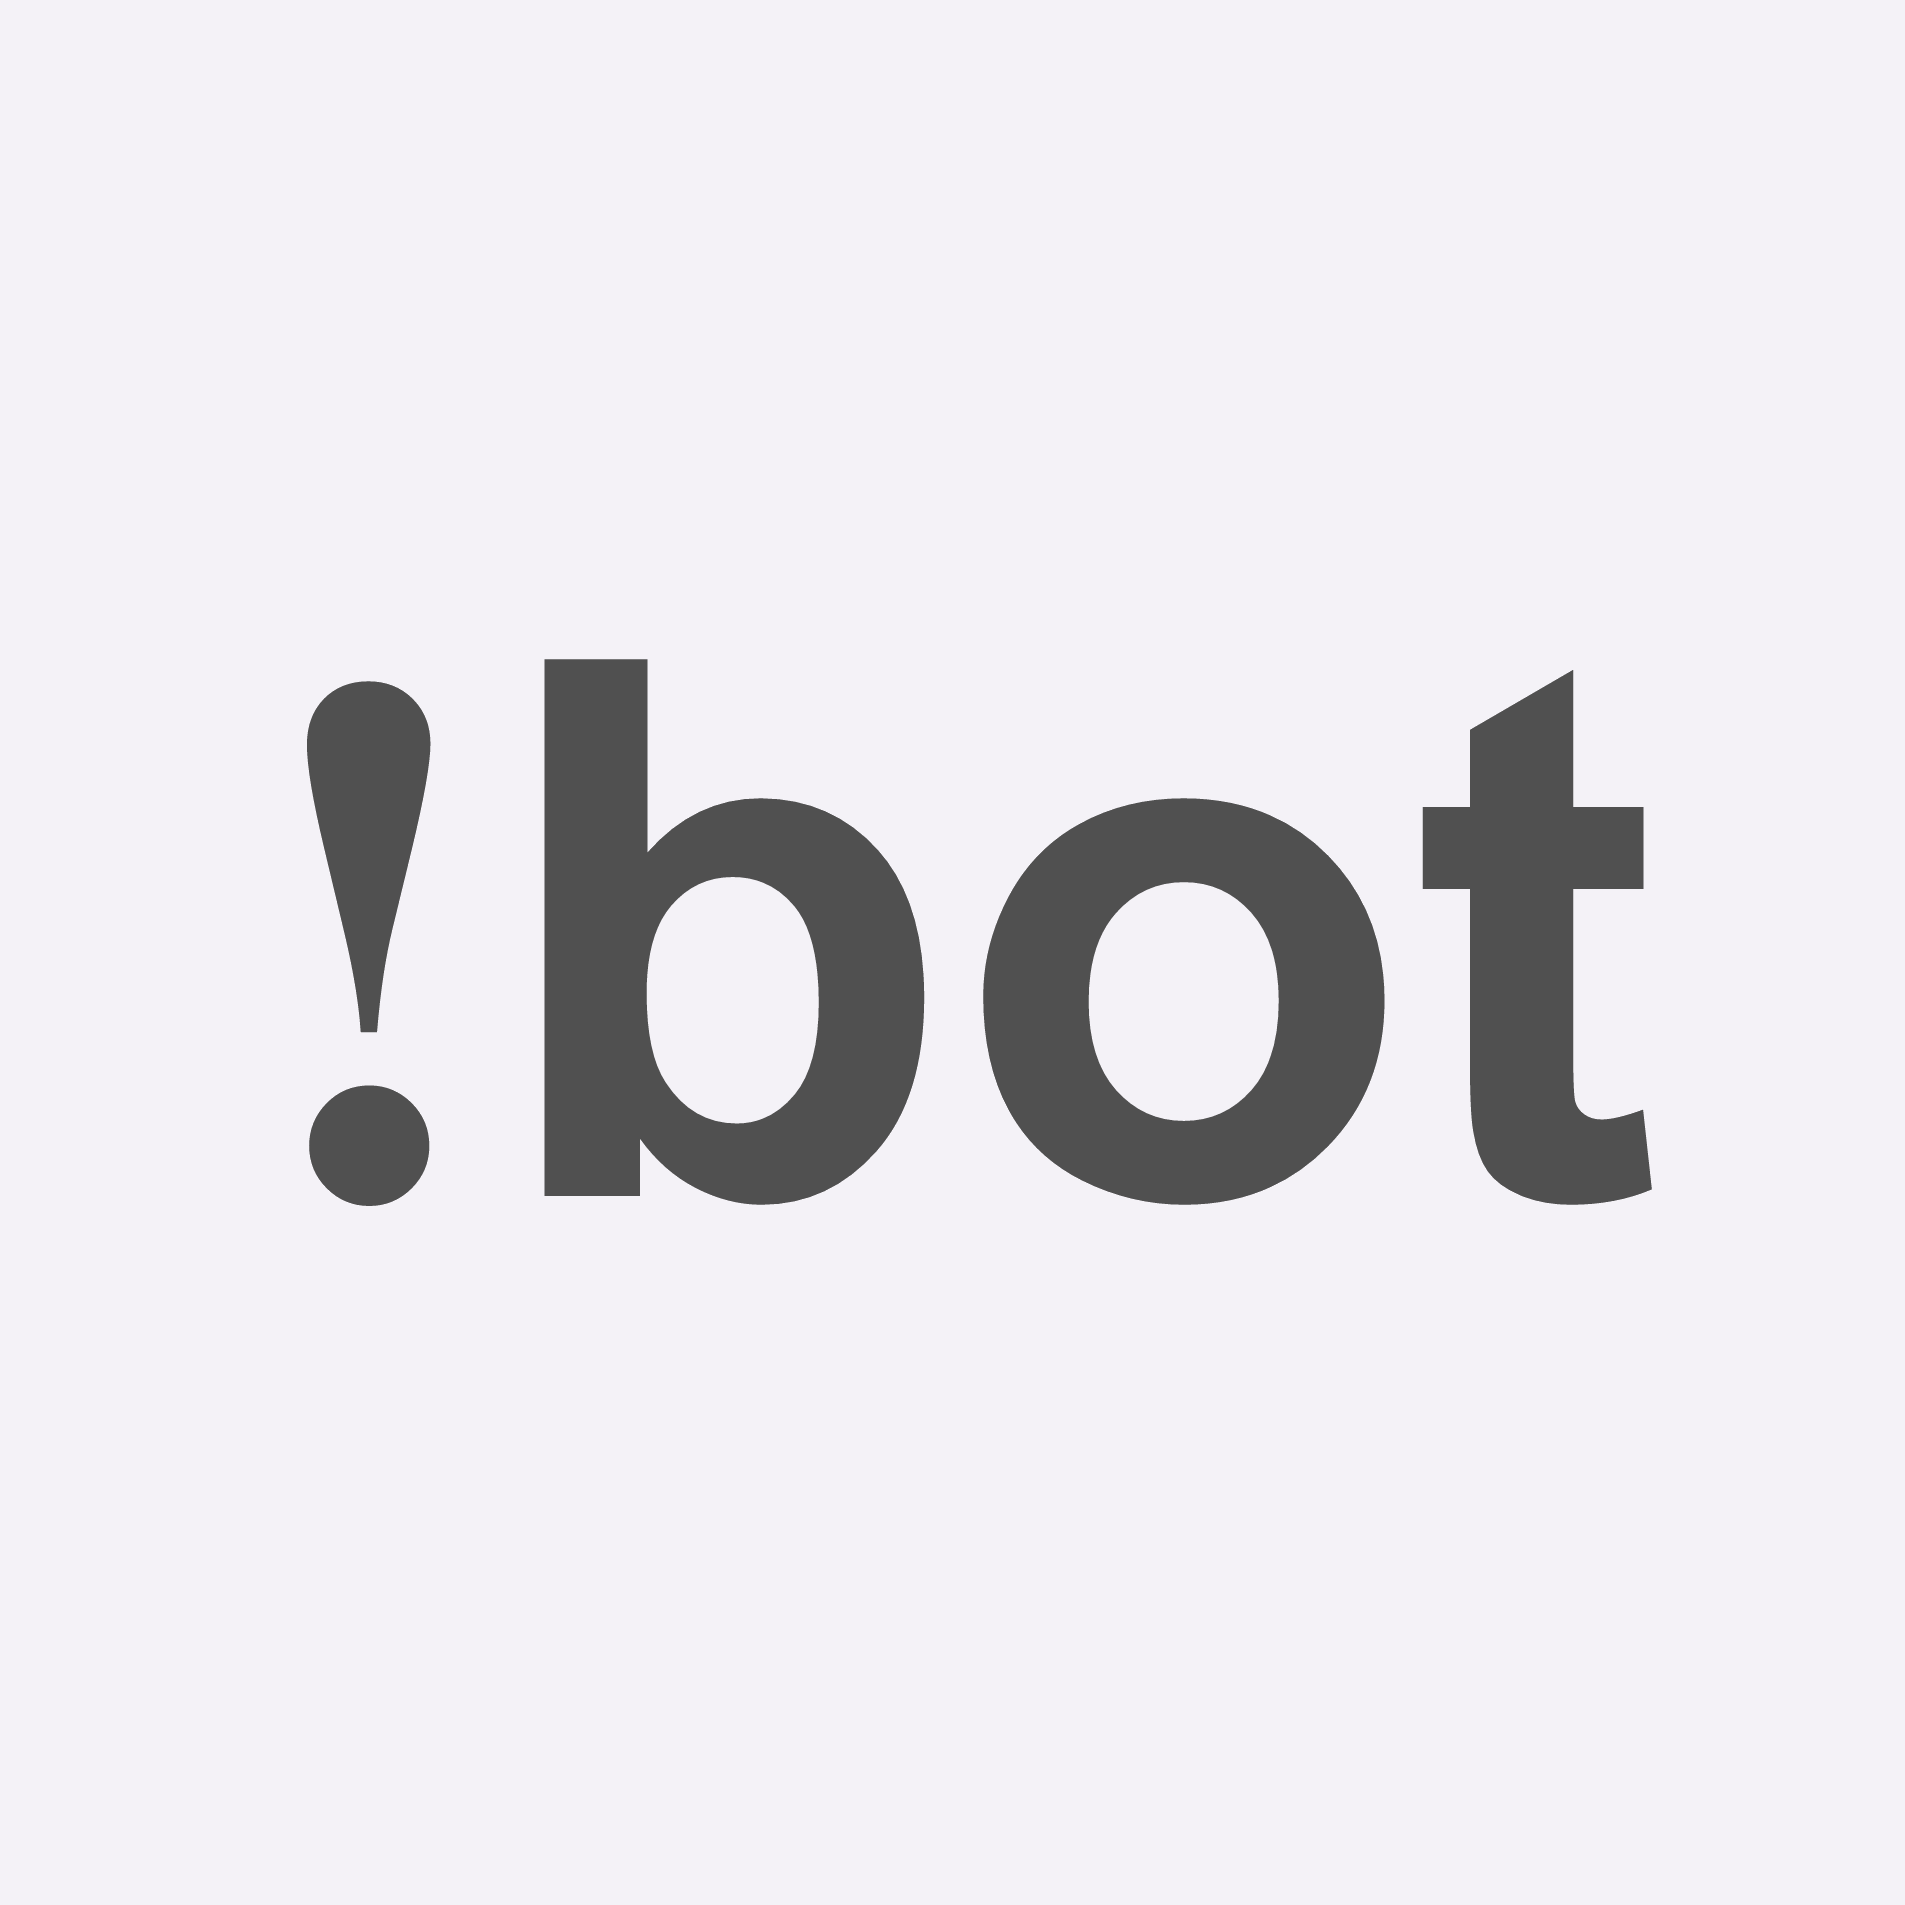 notbot logo